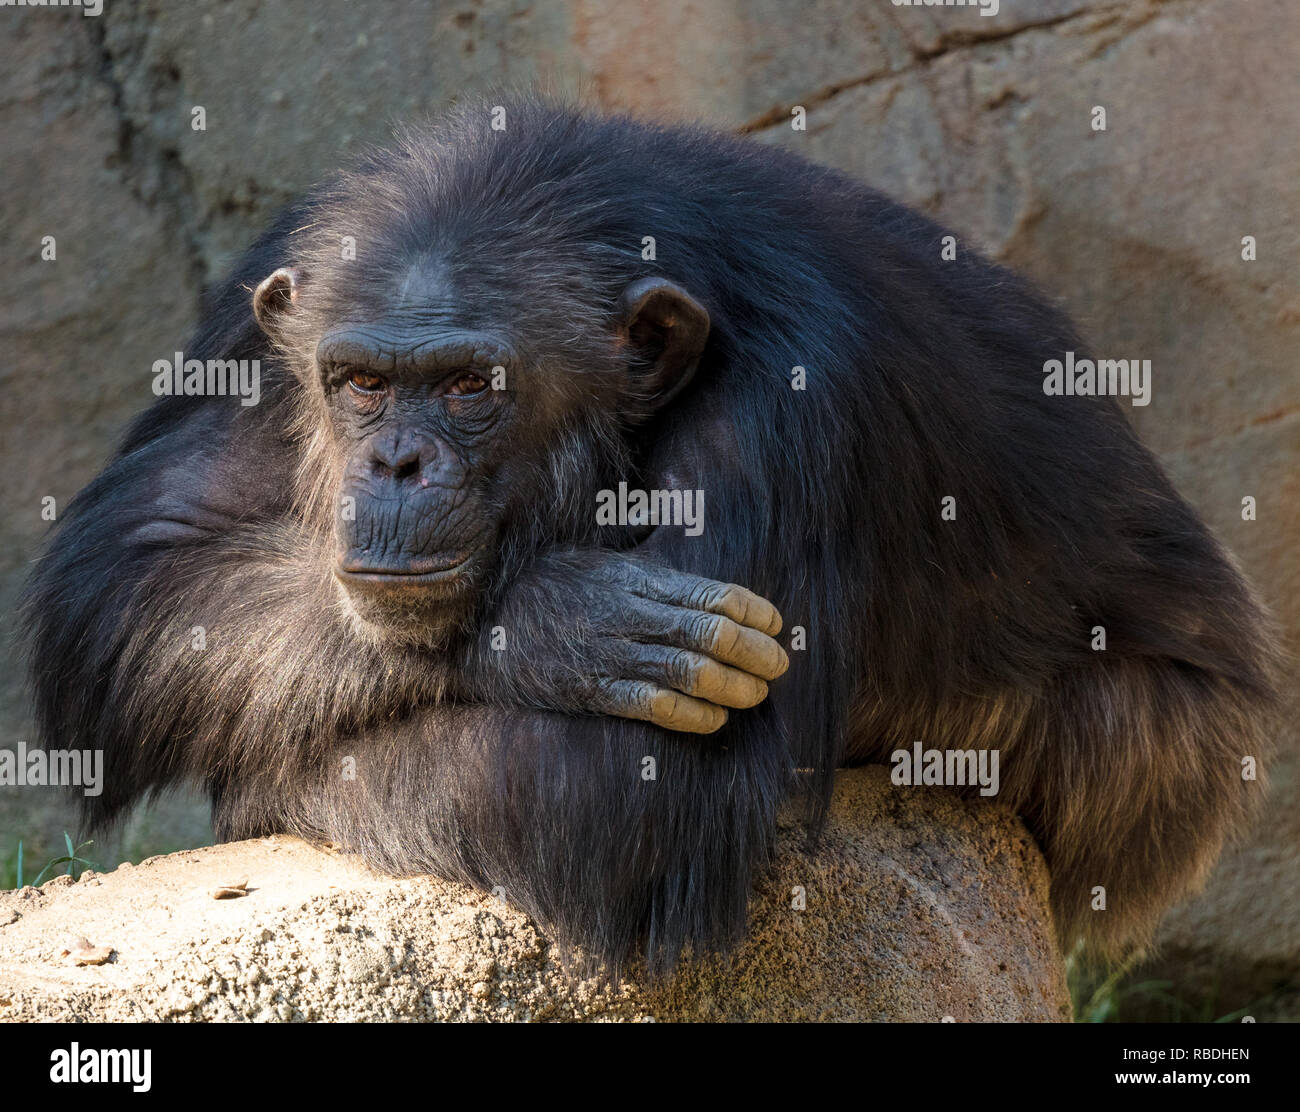 Chimpanzee thinking Stock Photo